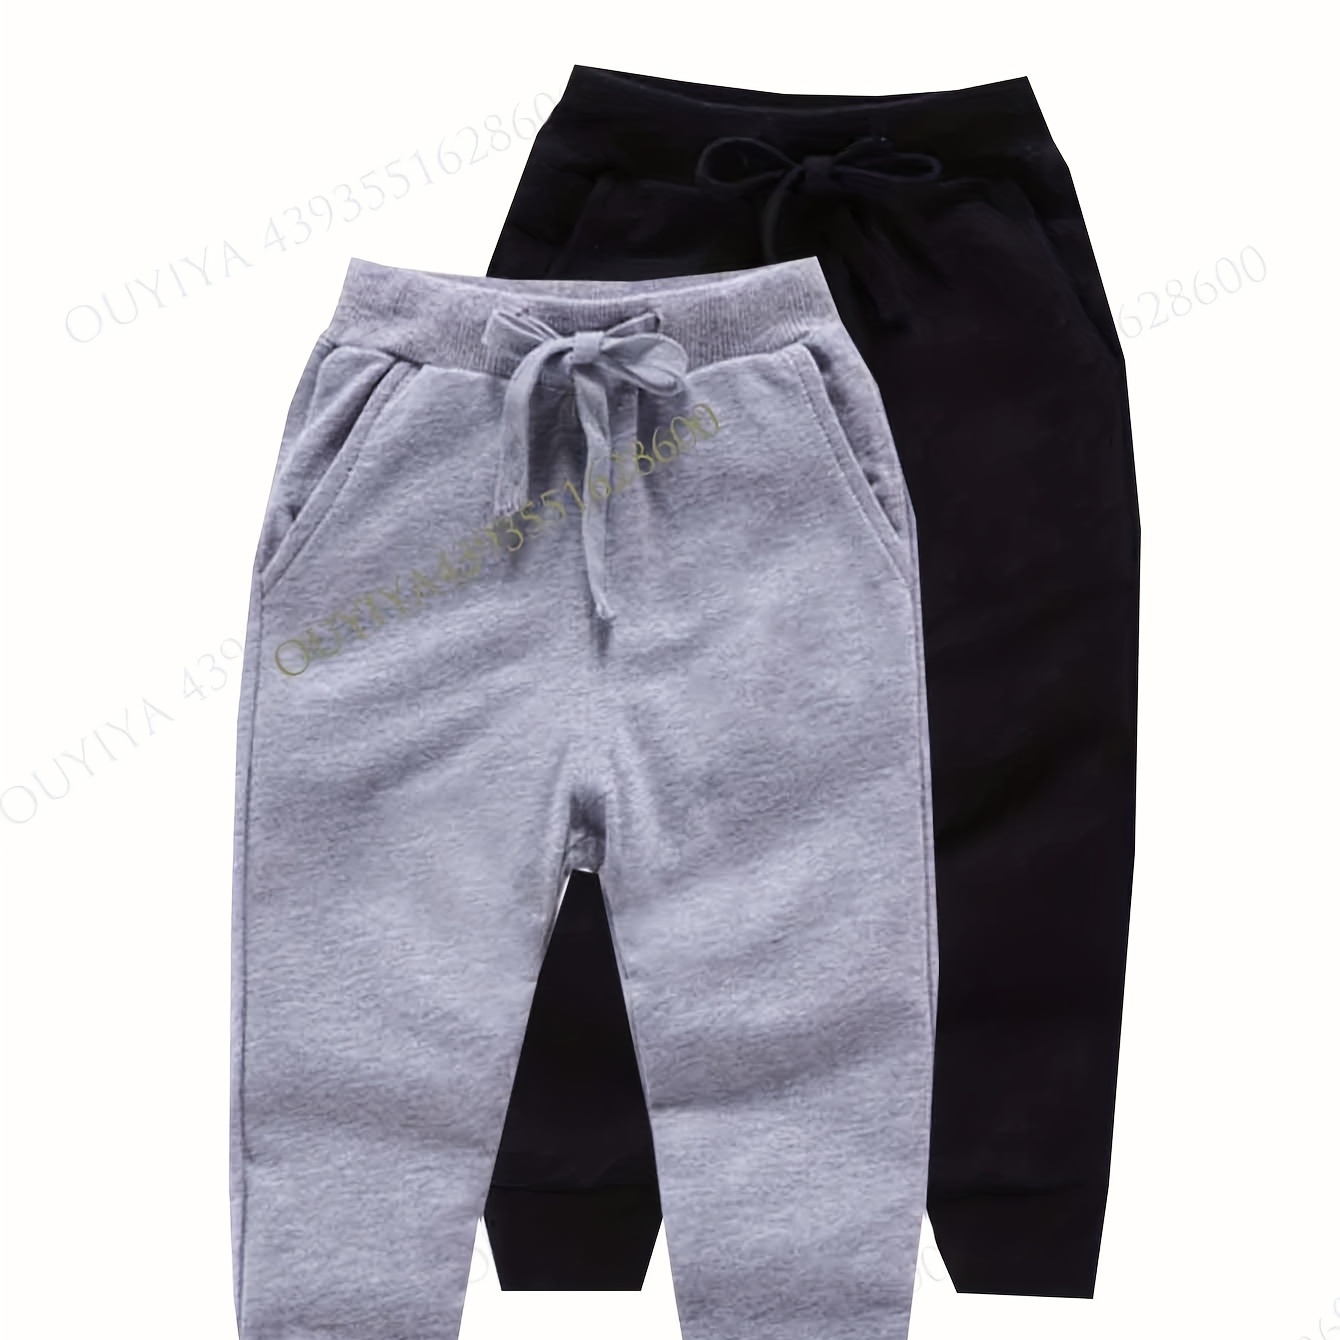 

2pcs Boys Casual Comfortable Active Sweatpants, Breathable Jogger Sports Pants, Kids Clothes Outdoor